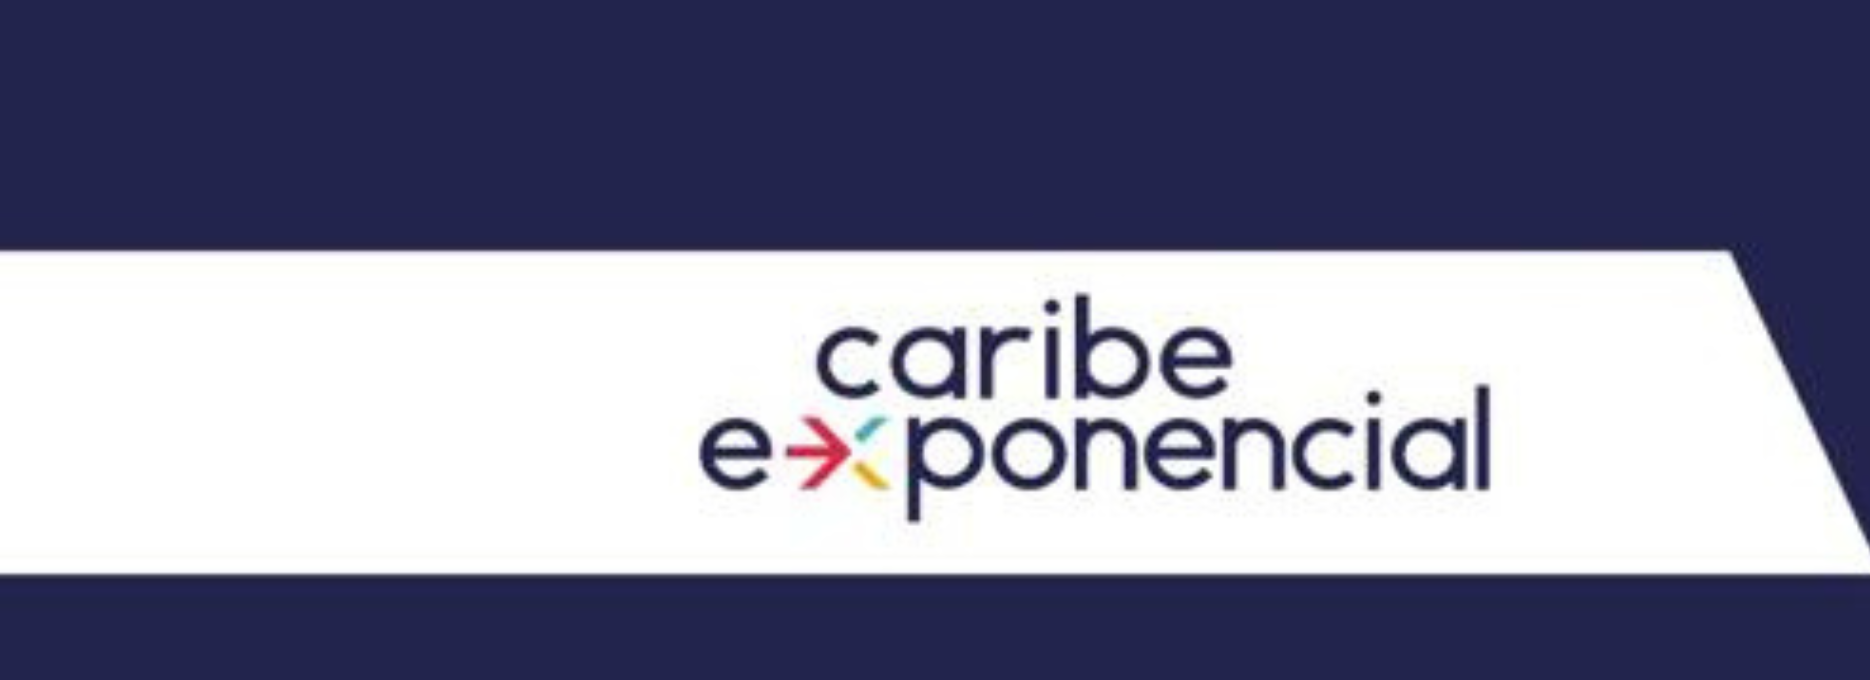 diseno-caribe-exponencial